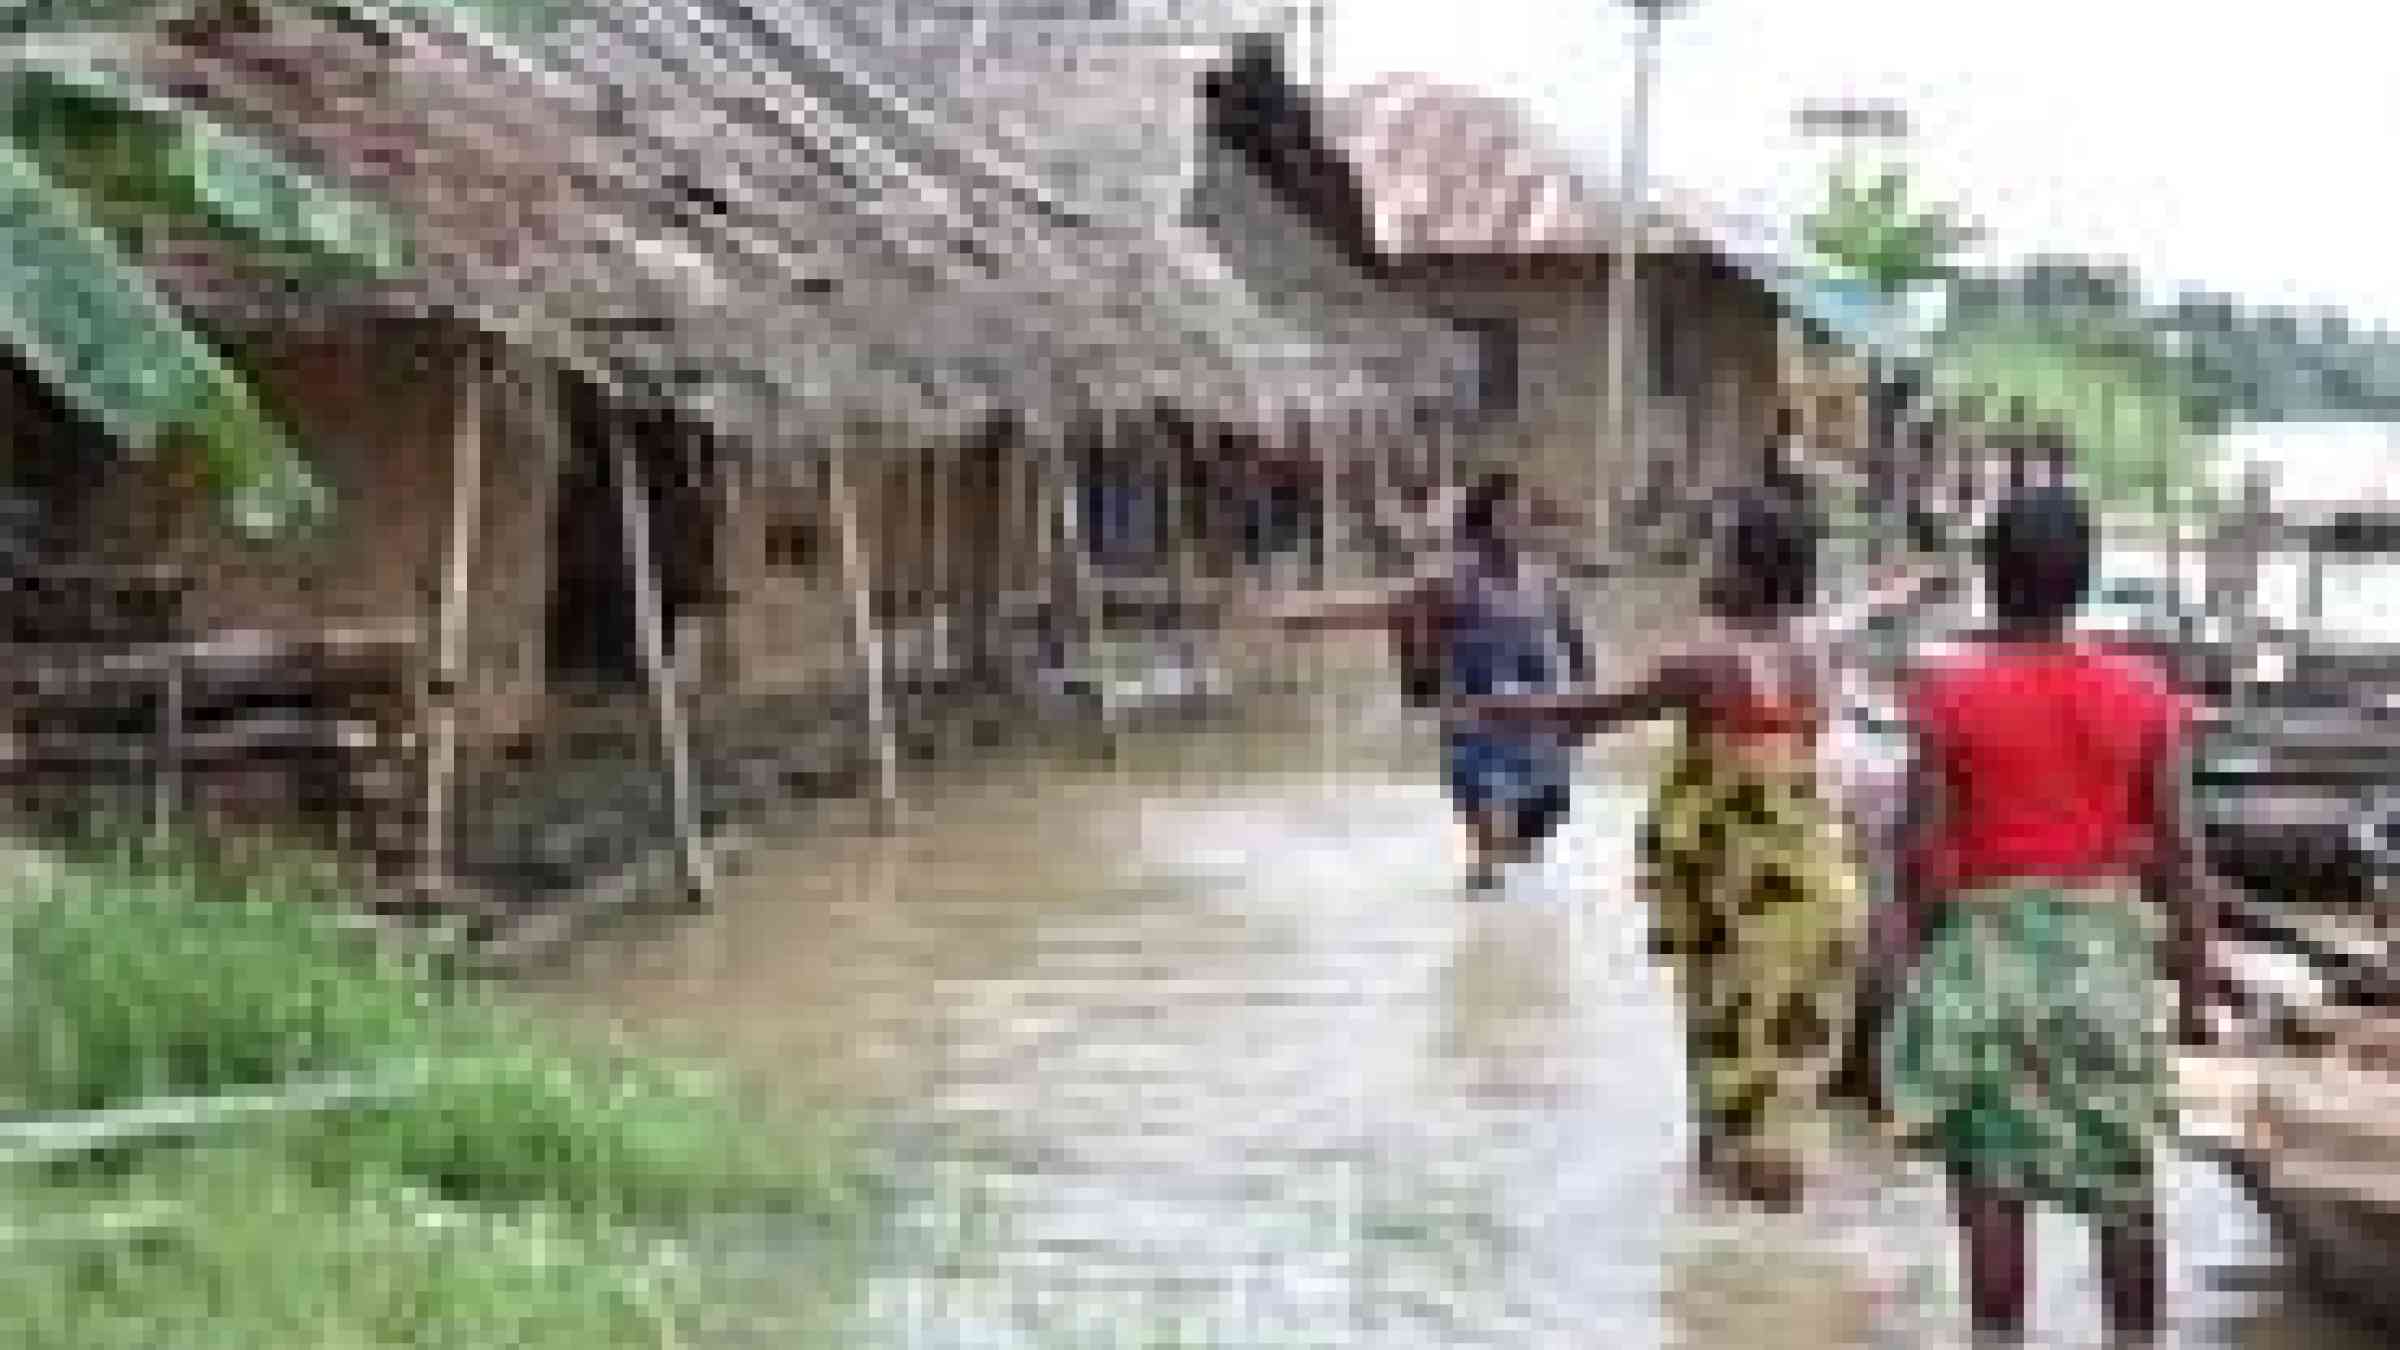 by Emmanuel Gbemudu/IRIN http://www.irinnews.org/report/99778/west-africa-scores-high-in-disaster-risk